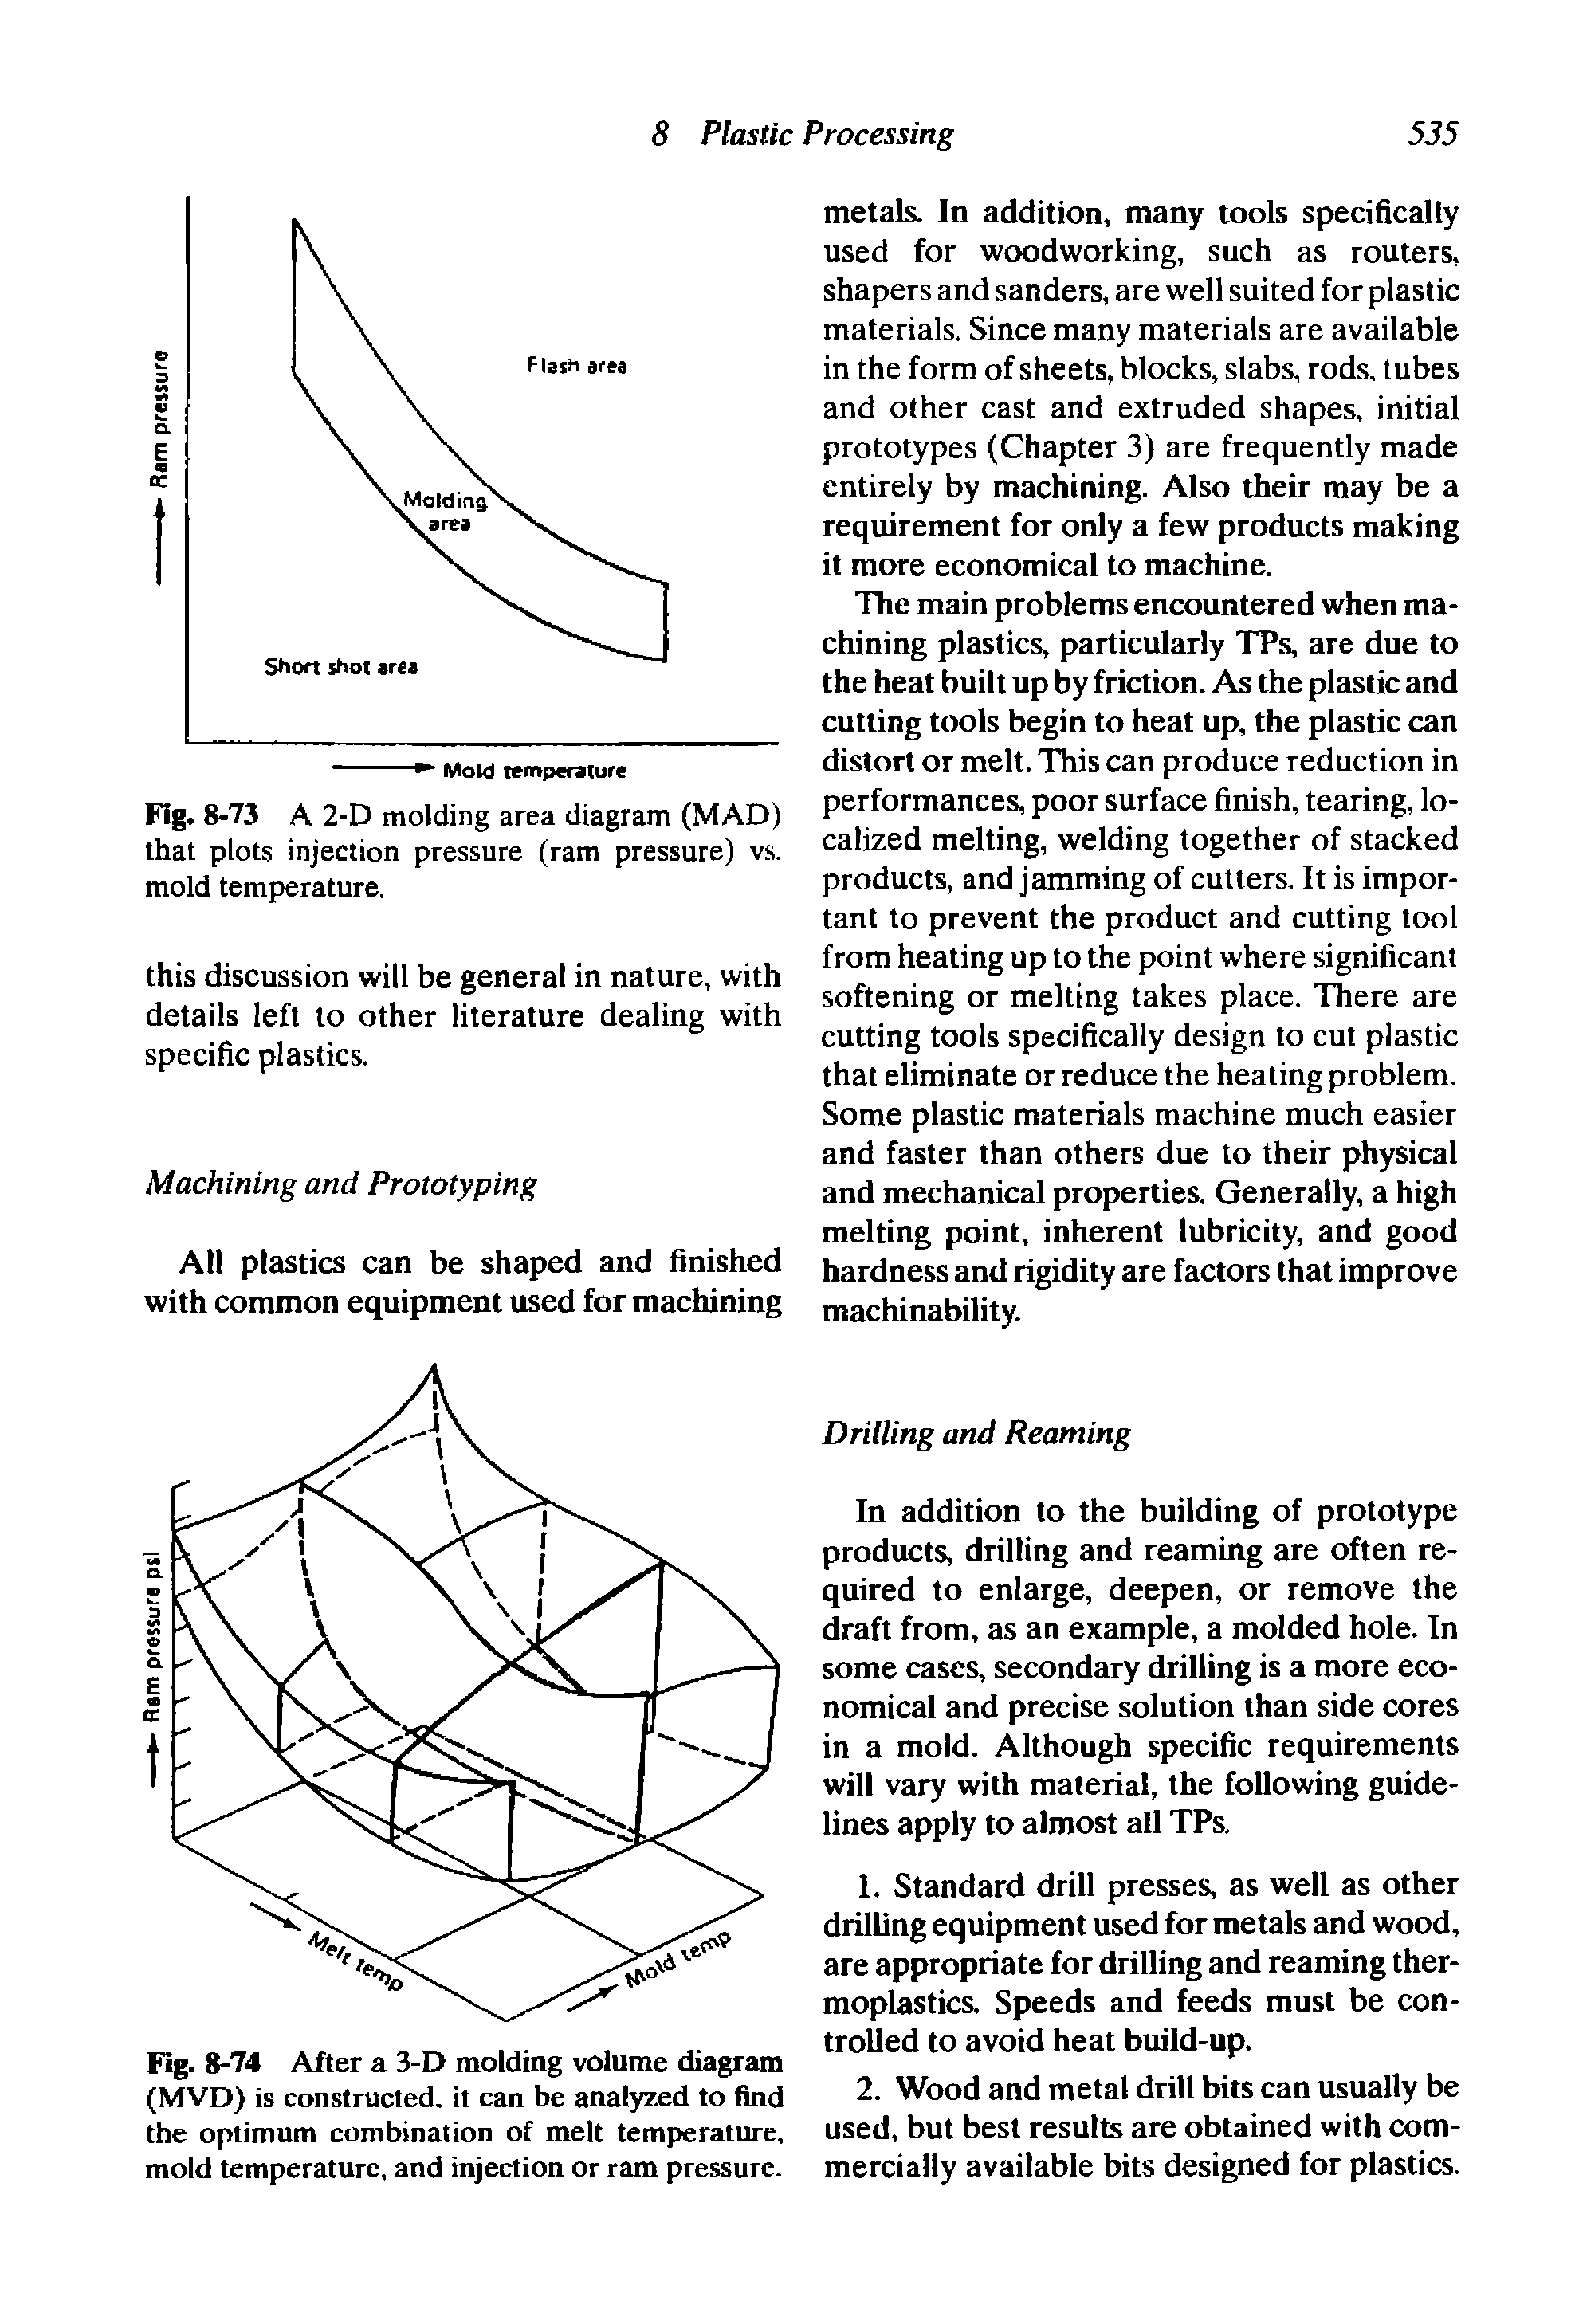 Fig. 8-73 A 2-D molding area diagram (MAD) that plots injection pressure (ram pressure) vs. mold temperature.